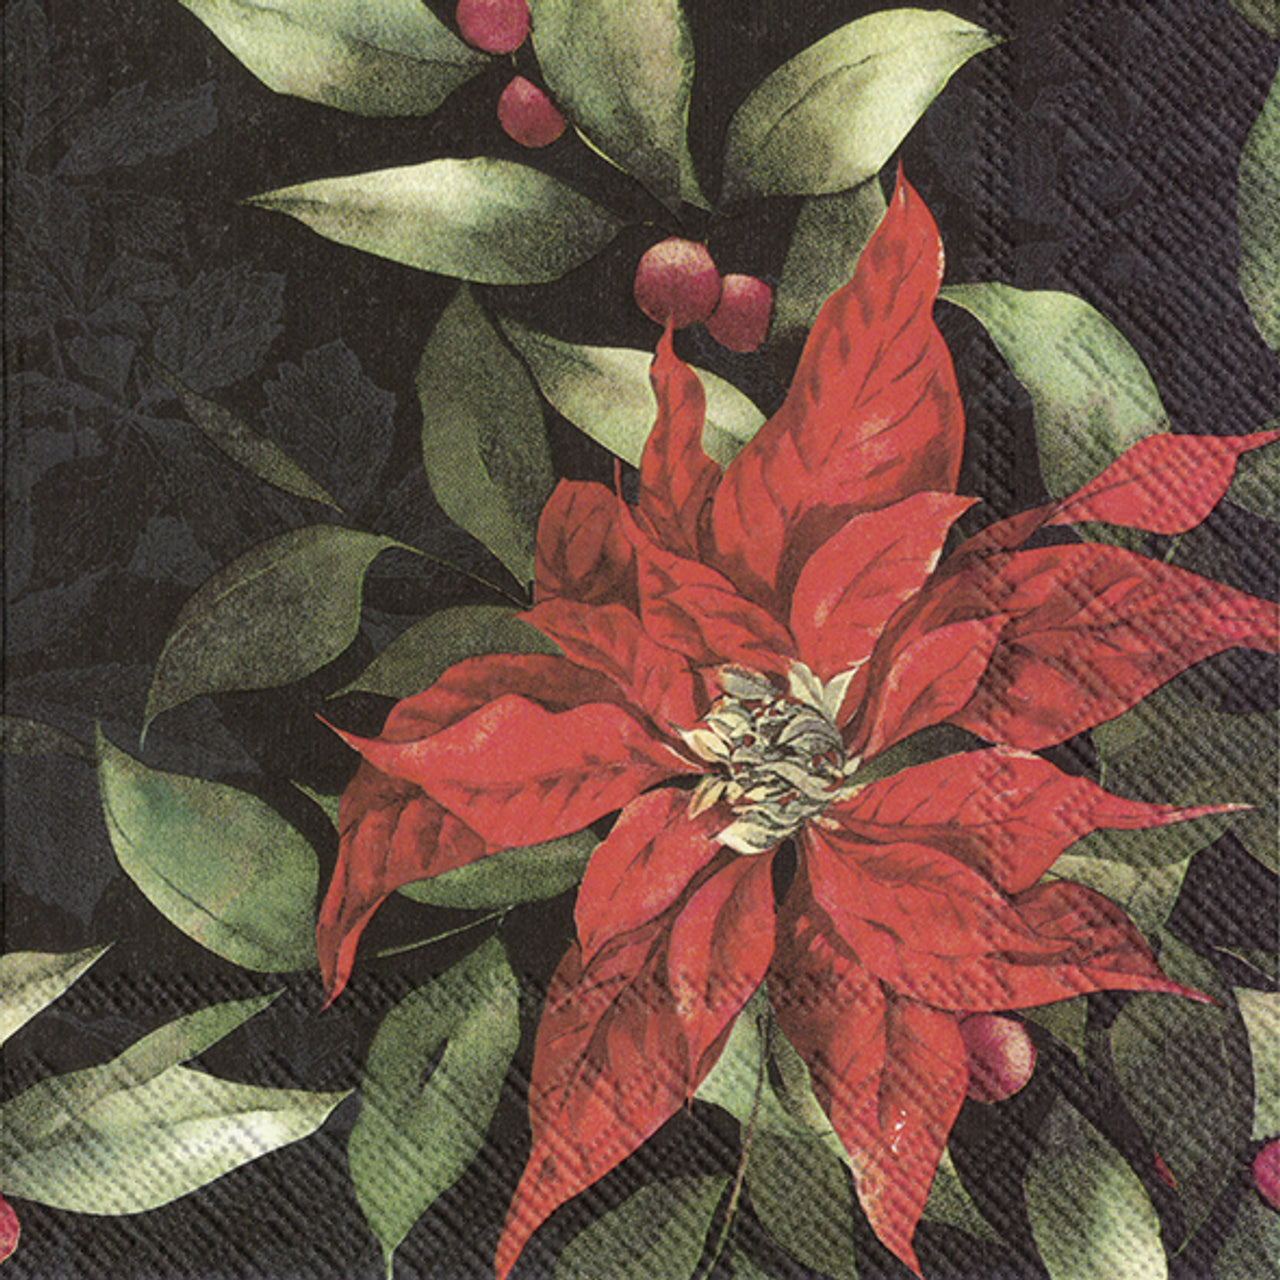 Serviettes - Red Poinsettia on Black - Gaudy & Prim